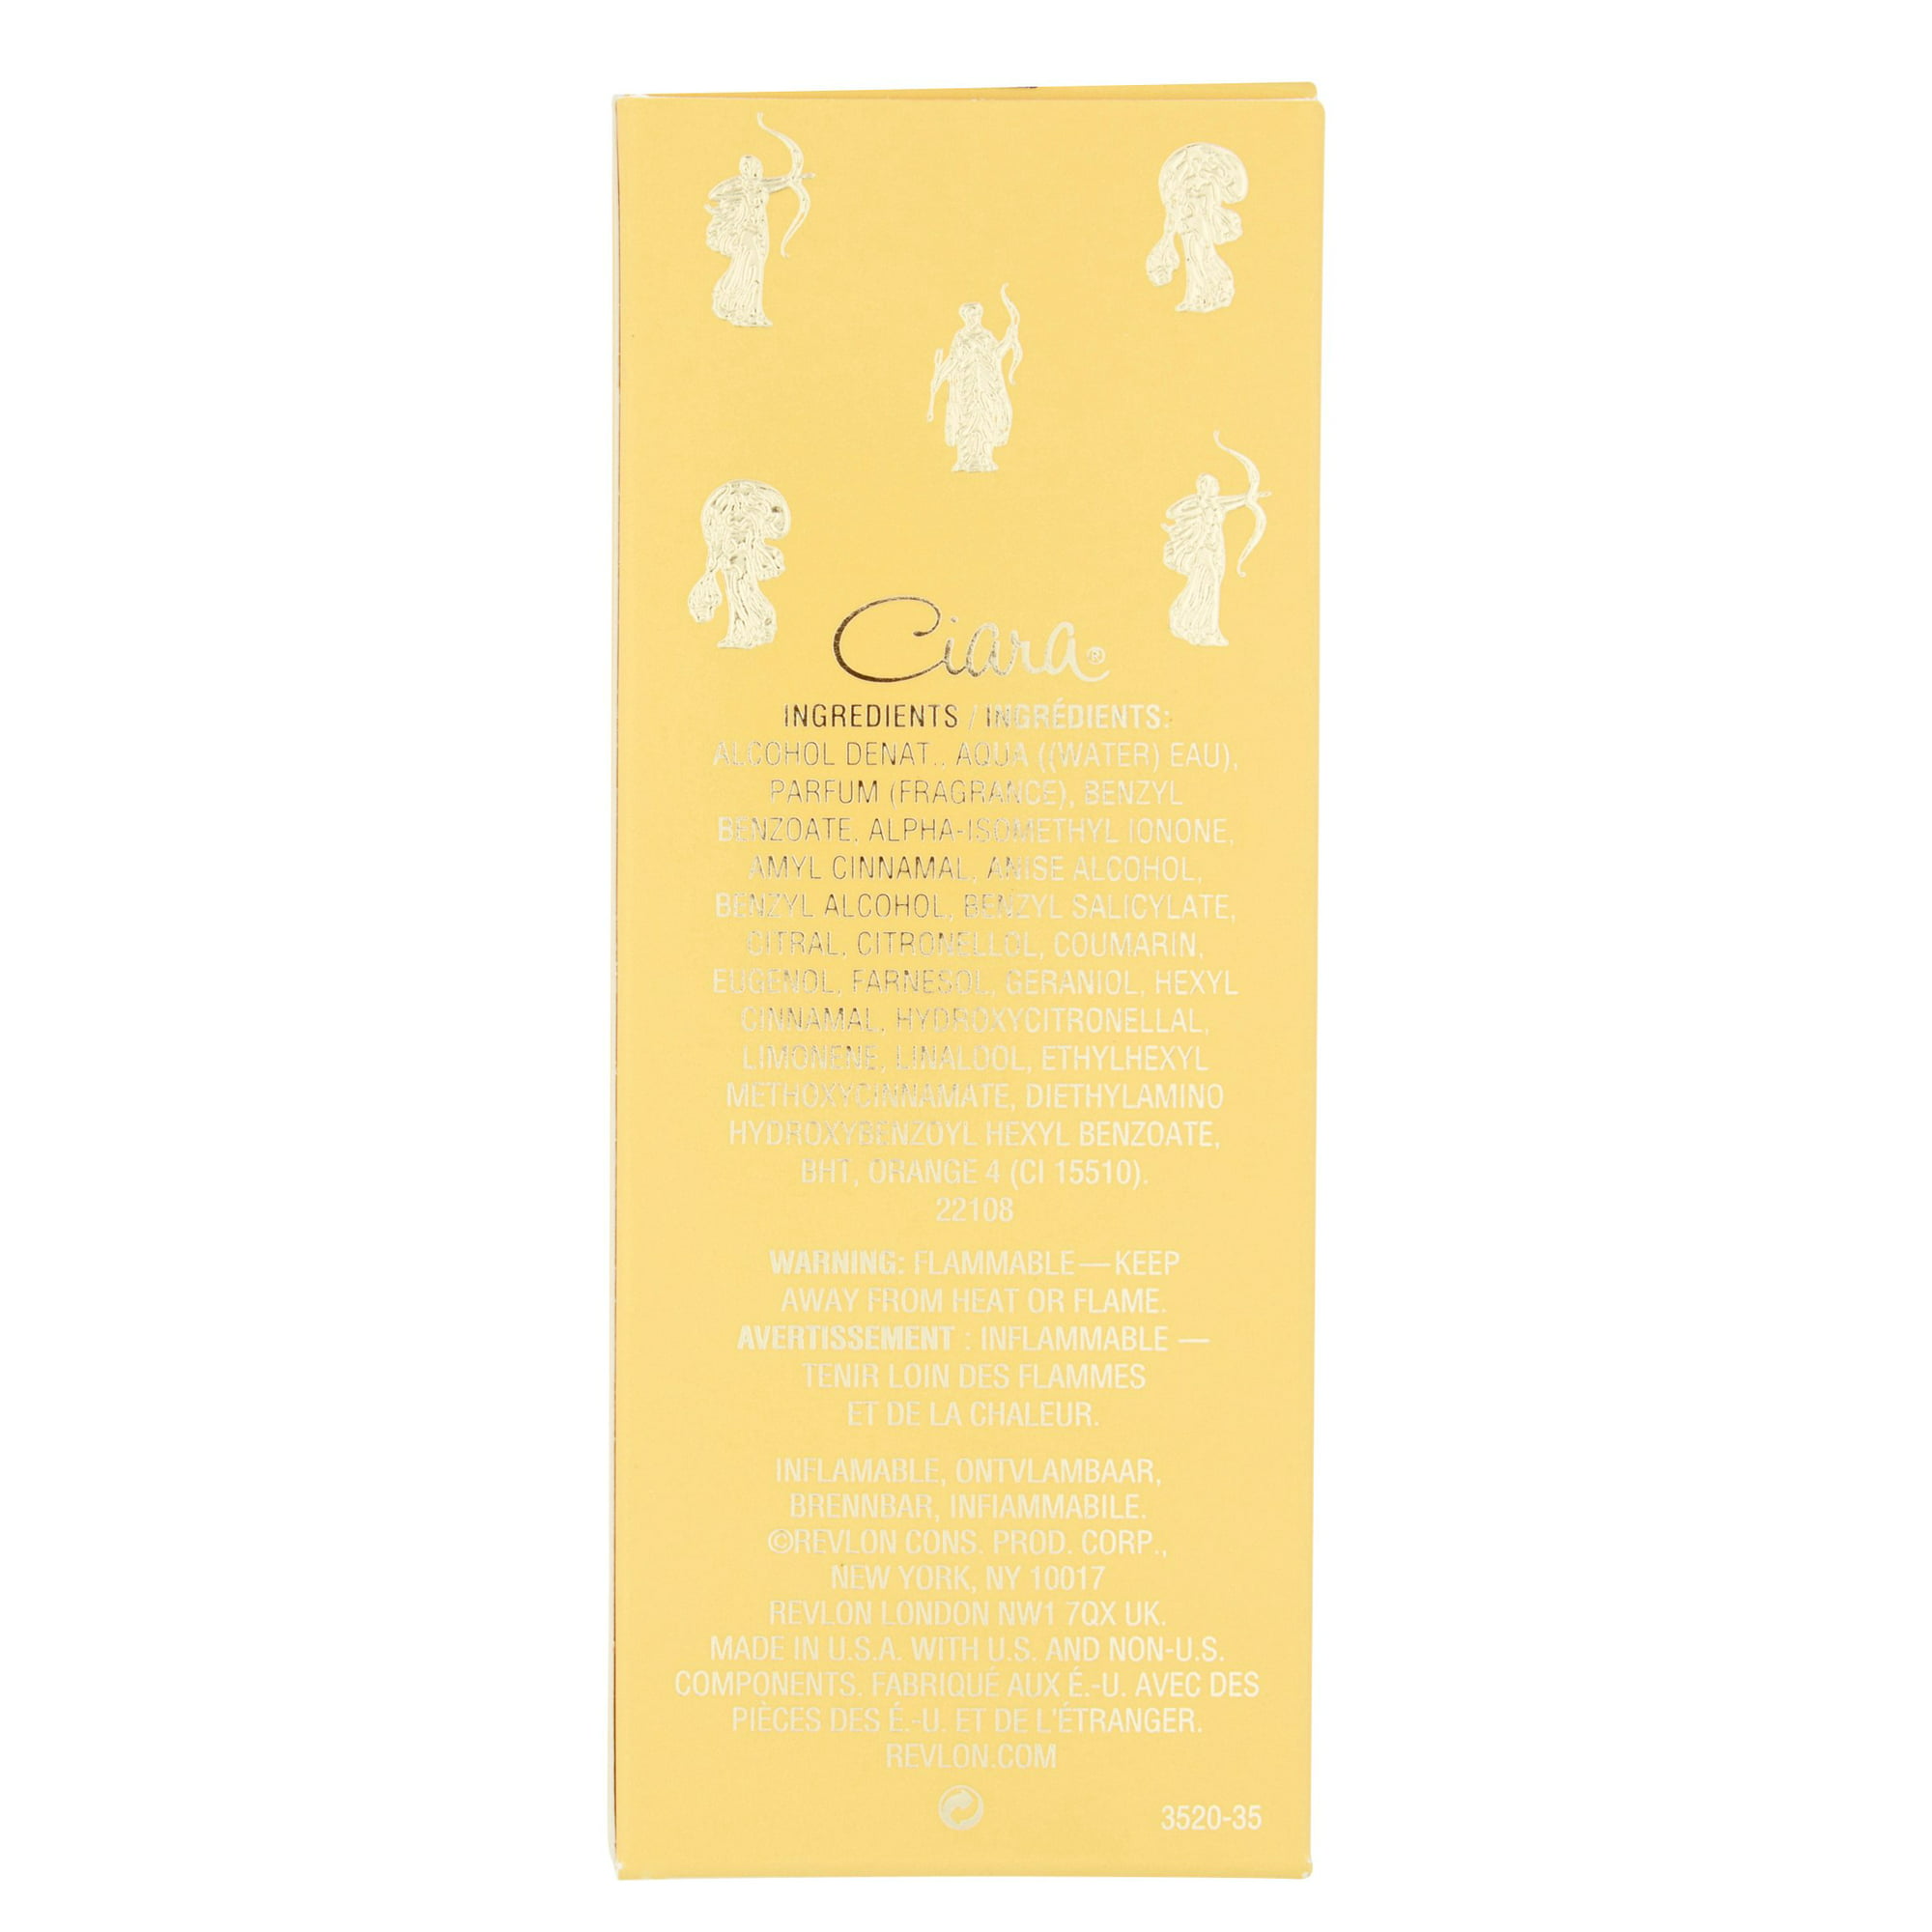 Revlon Ciara Eau de Cologne, Perfume for Women, 2.3 Oz